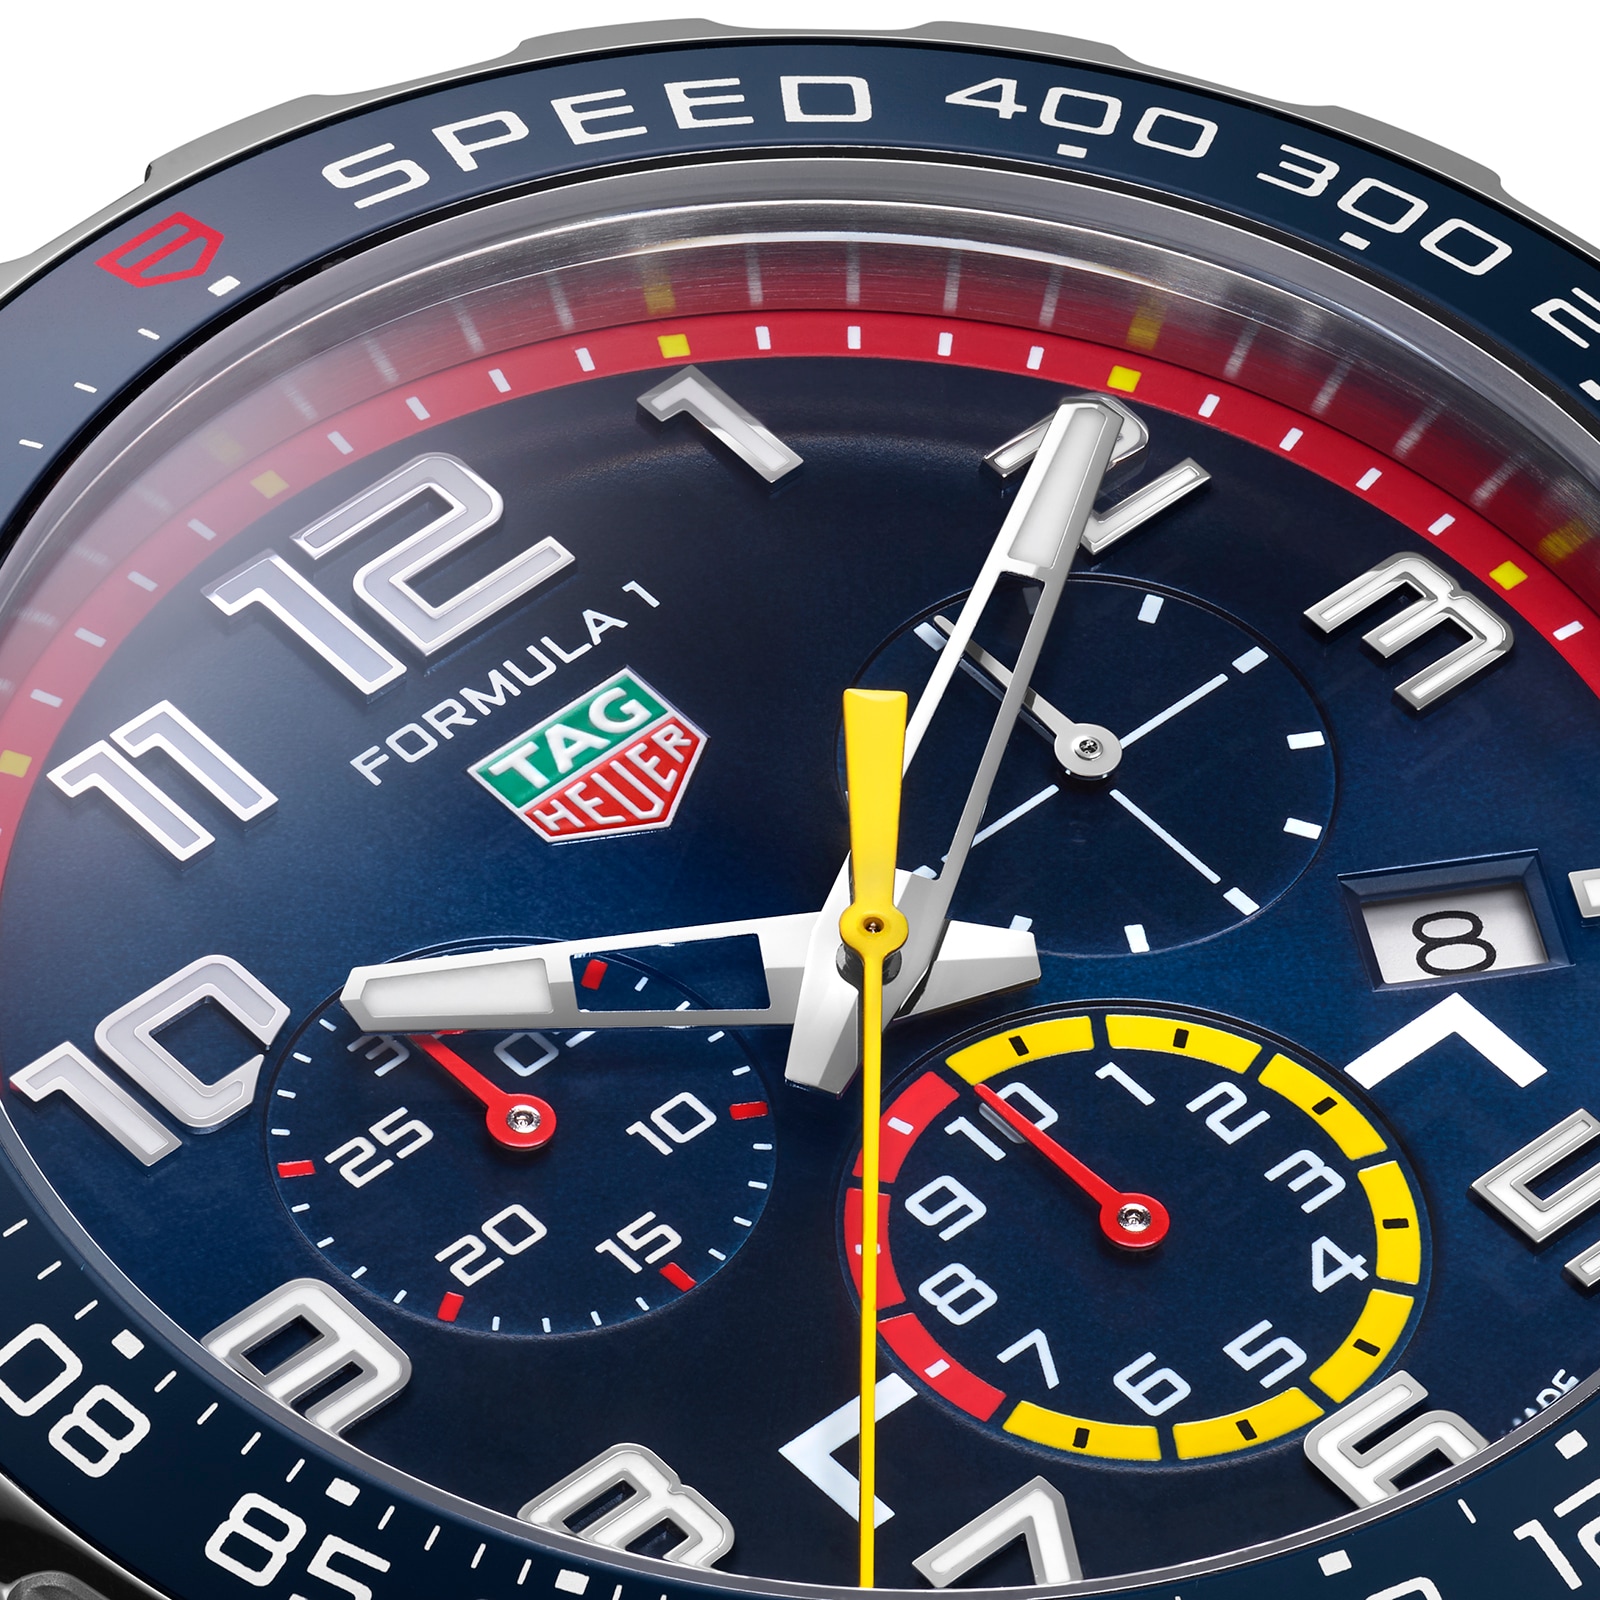 Marchand Carbon GT Chronograph Watch | Racing Chronograph Watch | Carbon  Fiber Dial and Bezel | British Designed | Meca-Quartz Movement | Carbon  Fiber Watch | Watches for Men : Amazon.in: Fashion